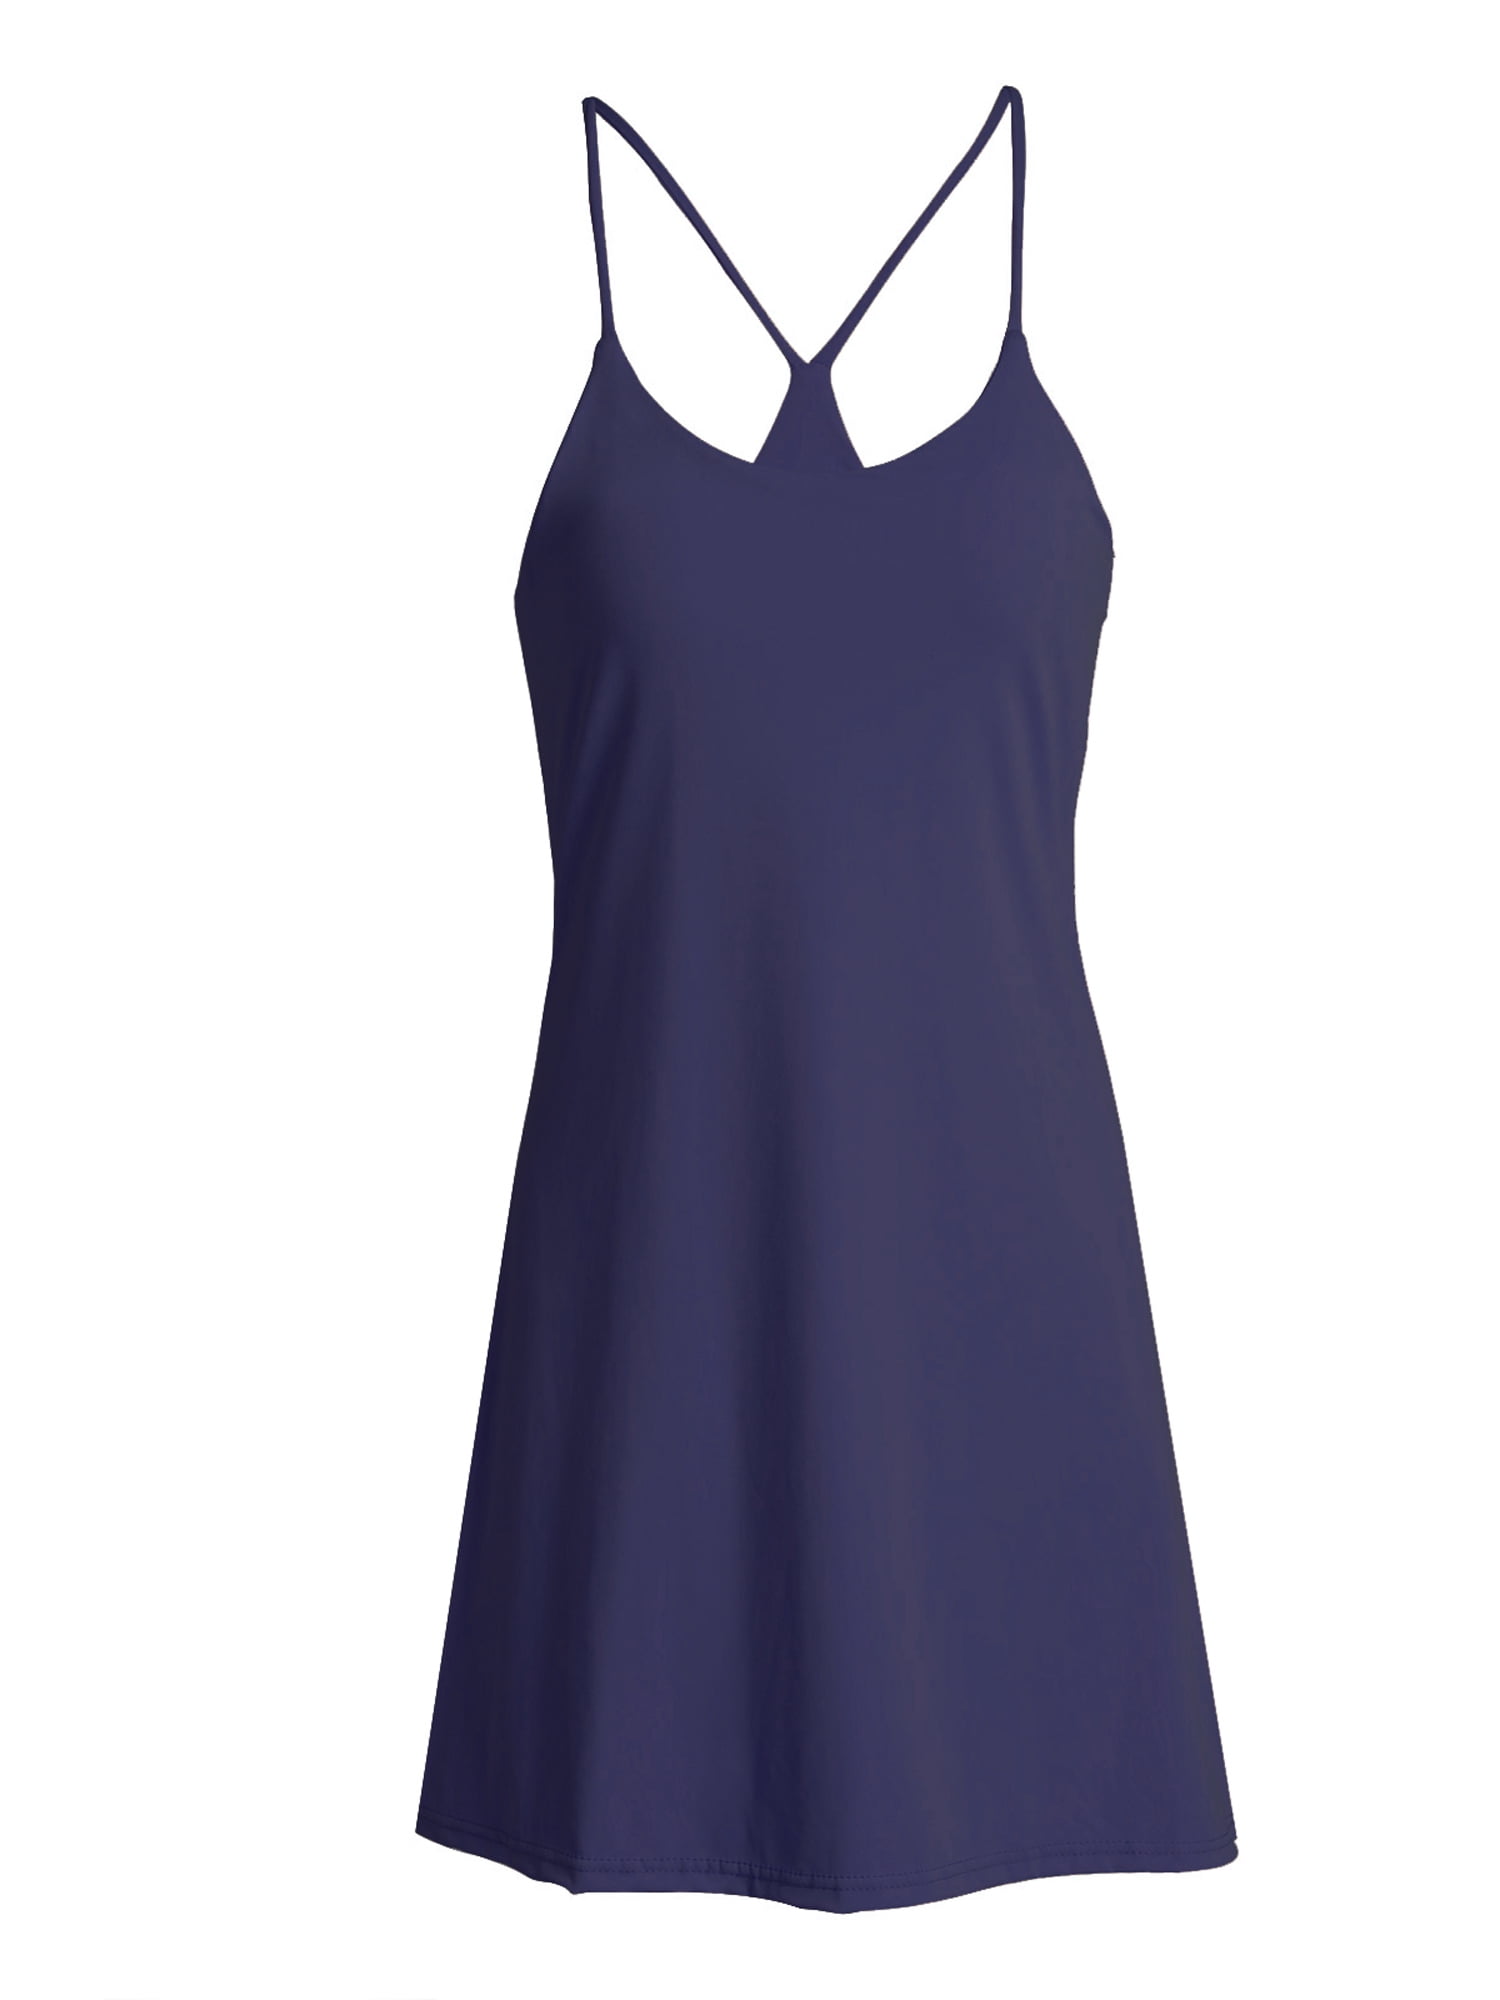 Biekopu Women's Mini Sport Dress False 2Pcs Spaghetti Strap Dress with  Built-in Bra + Shorts with Pocket Sportswear